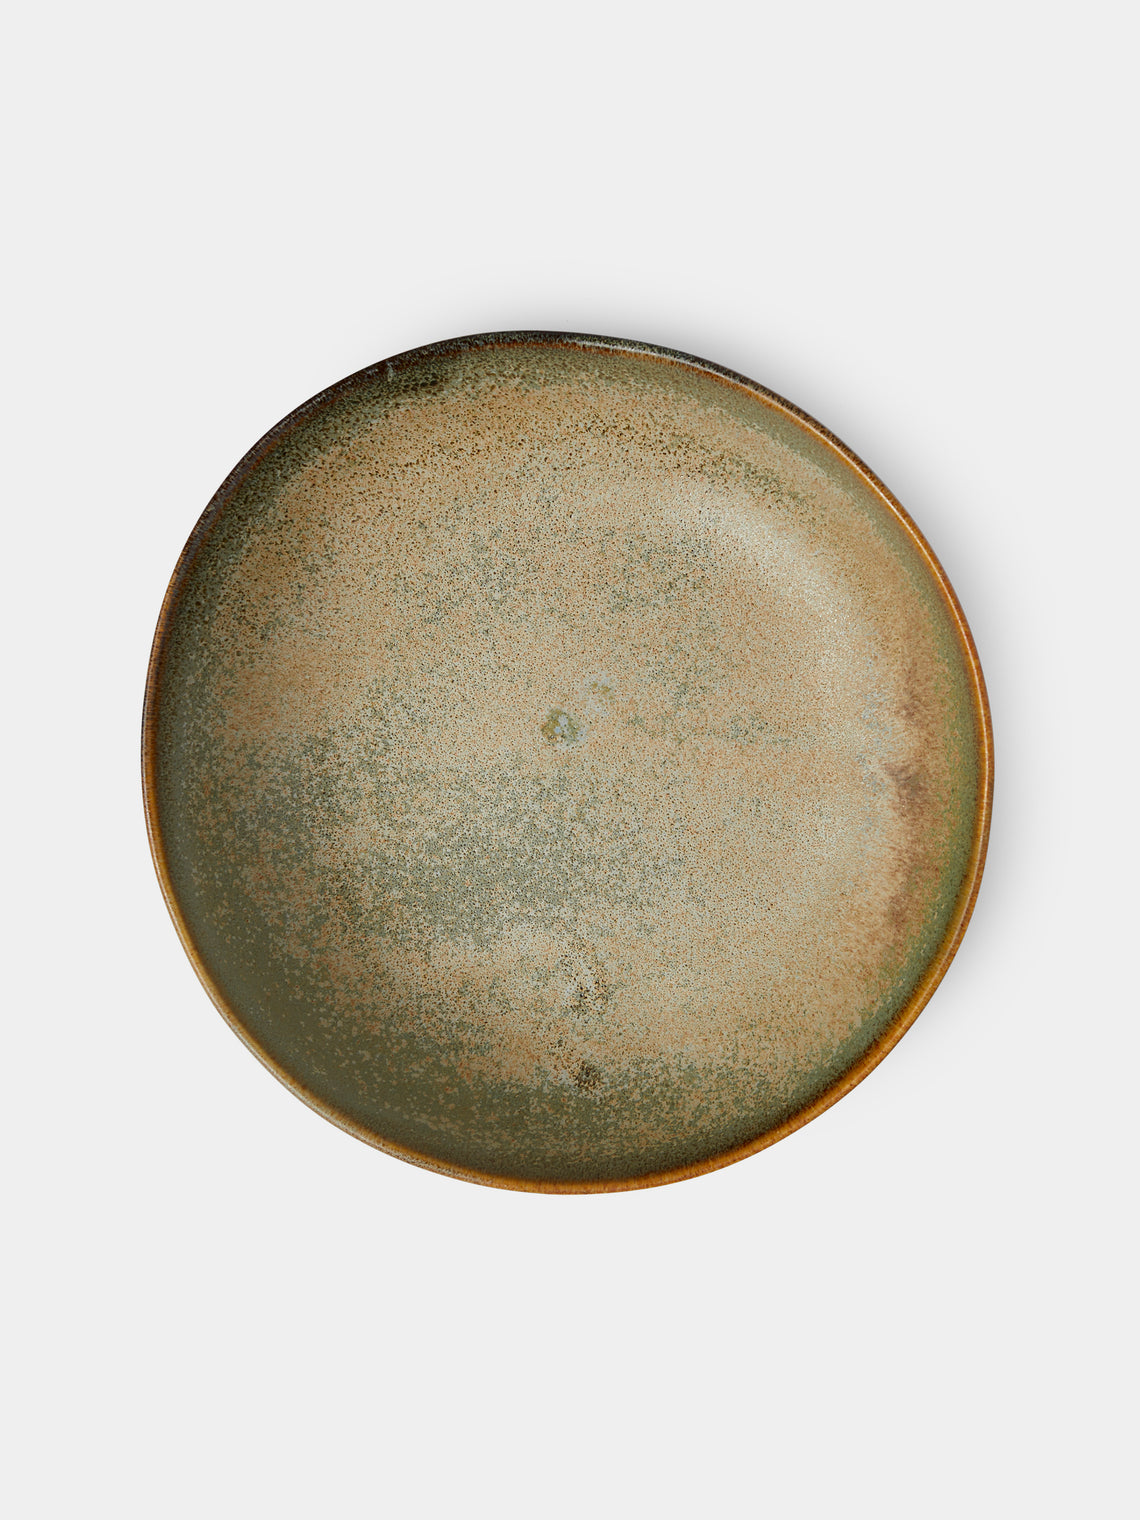 Mervyn Gers Ceramics - Hand-Glazed Ceramic Large Breakfast Bowls (Set of 6) - Beige - ABASK